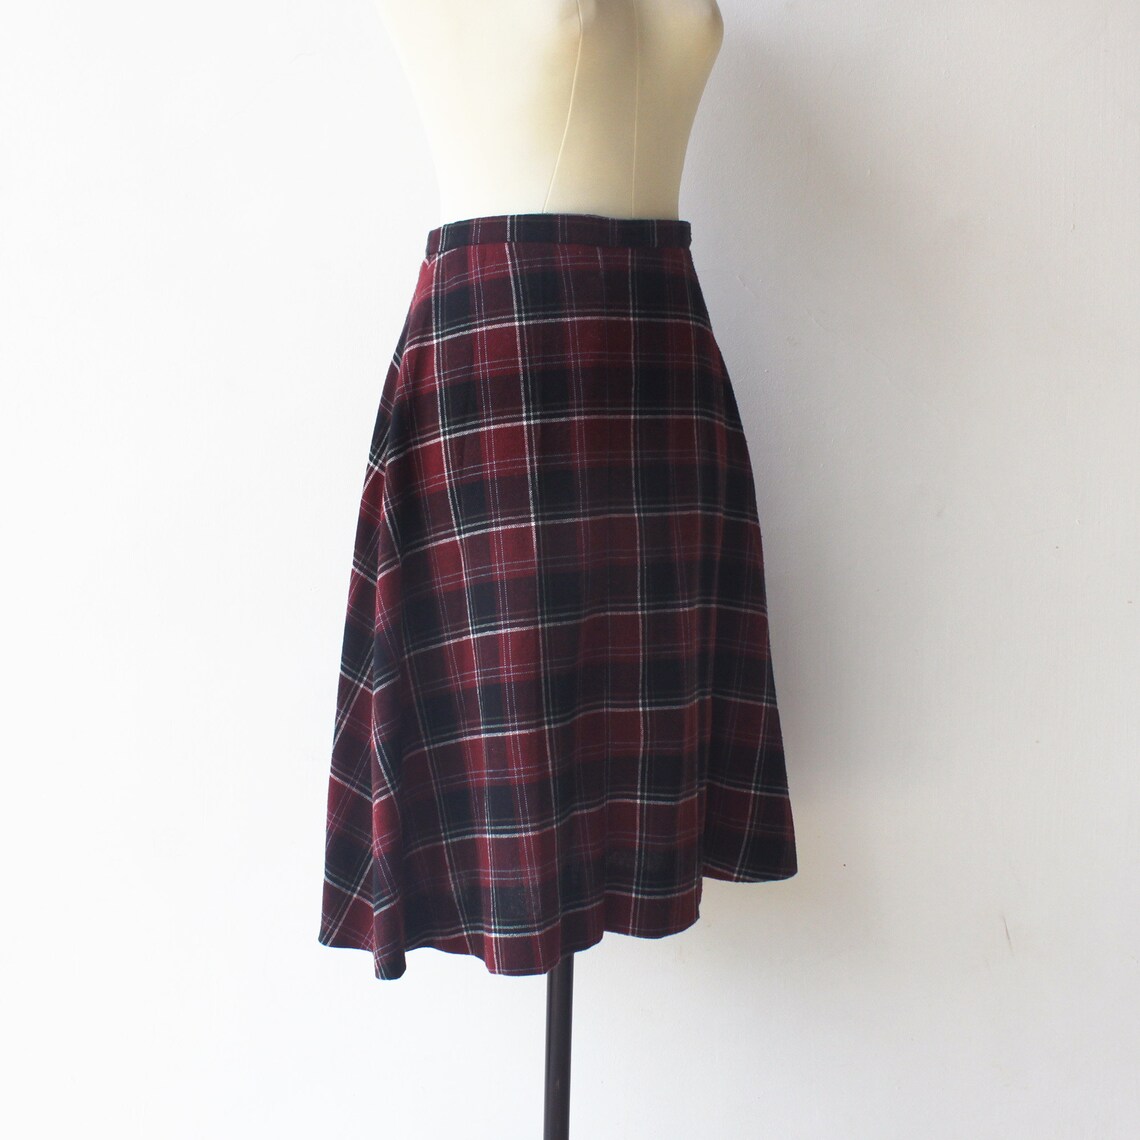 Vinatge Wool Skirt / Plaid Maroon Skirt / Size M L | Etsy